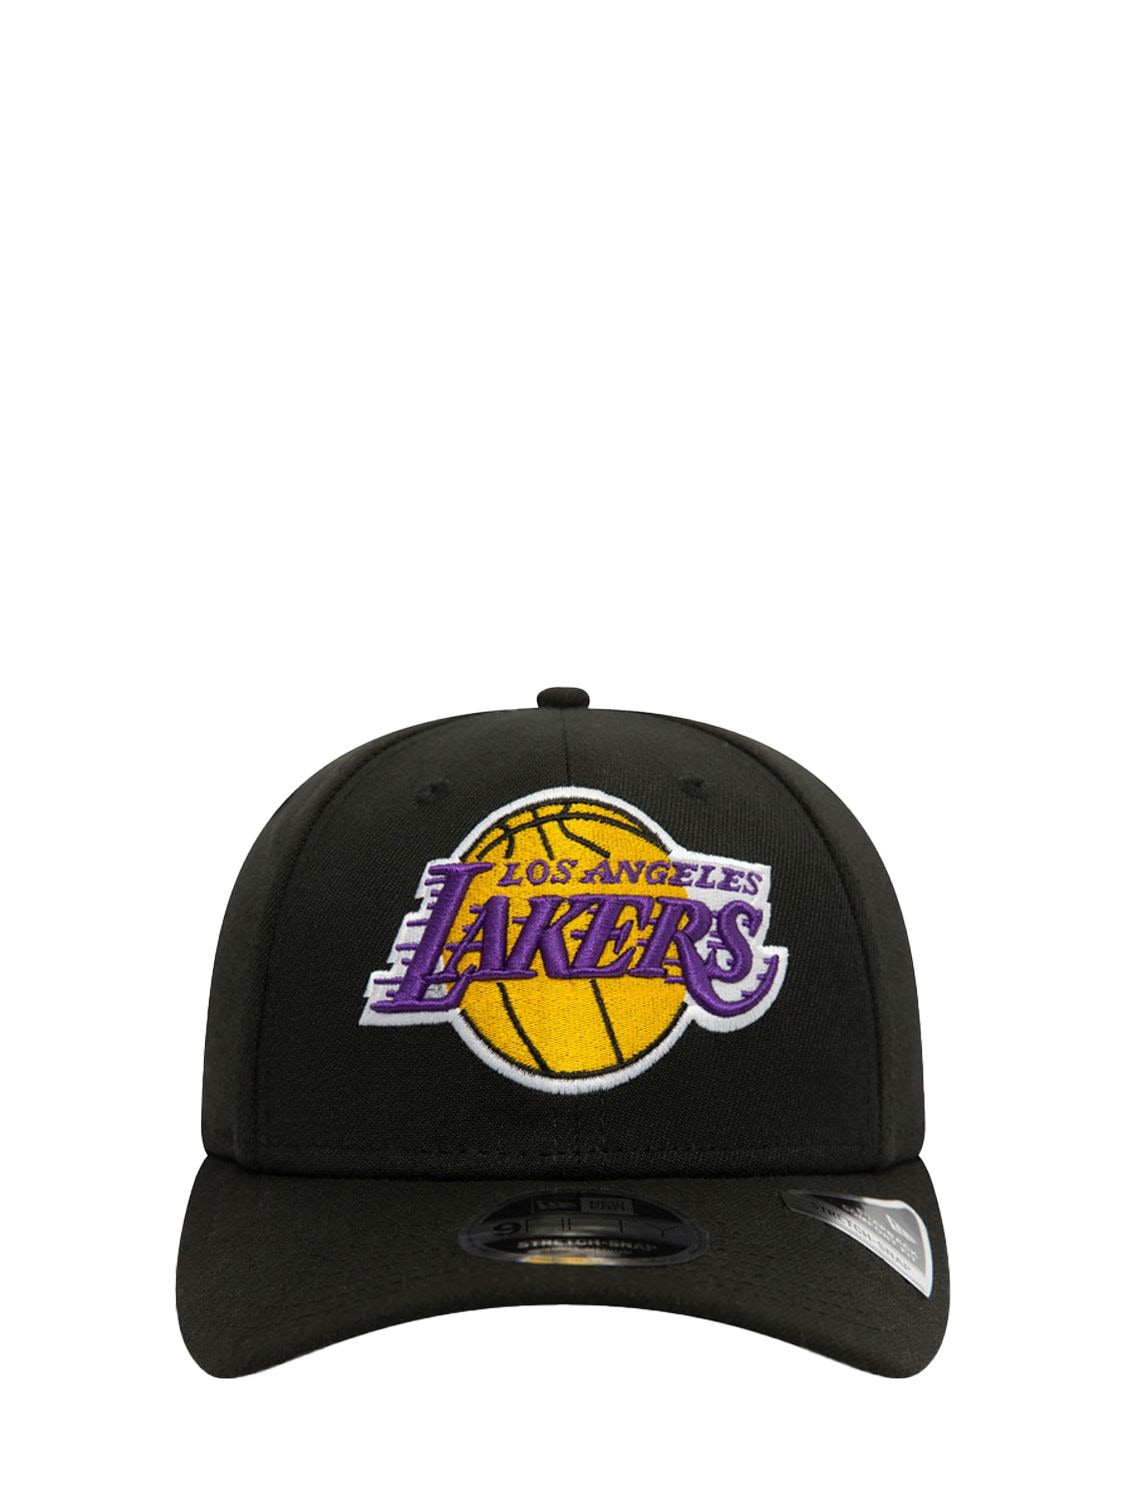 New Era 9fifty La Lakers帽子 In Black